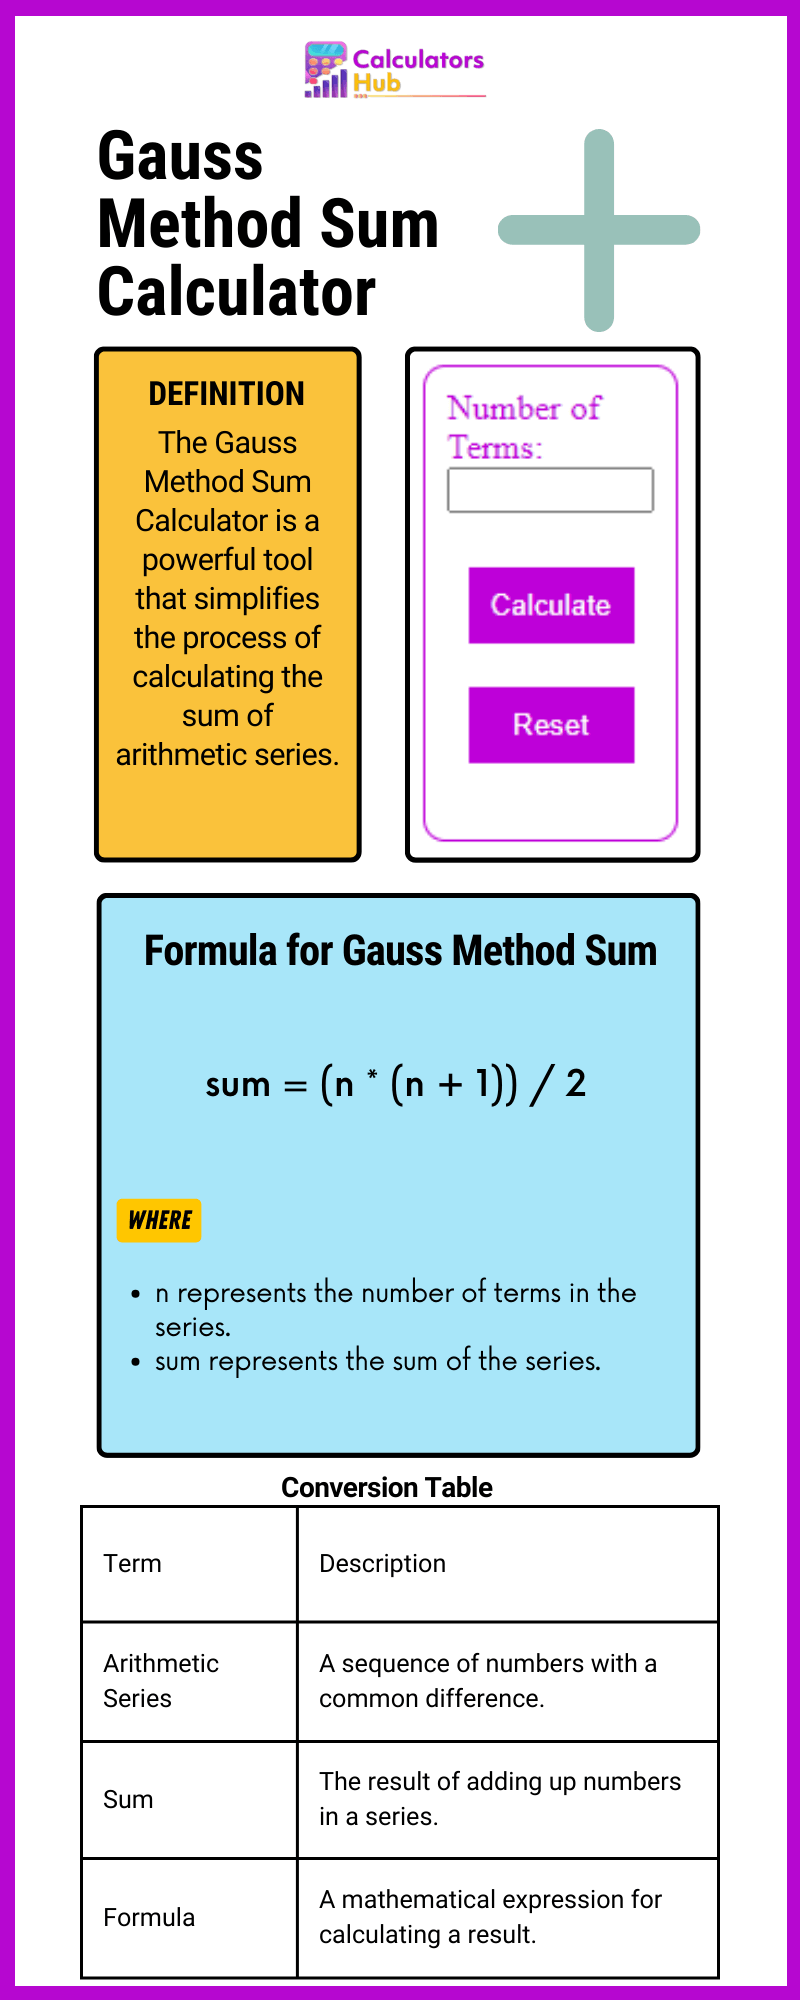 Gauss Method Sum Calculator